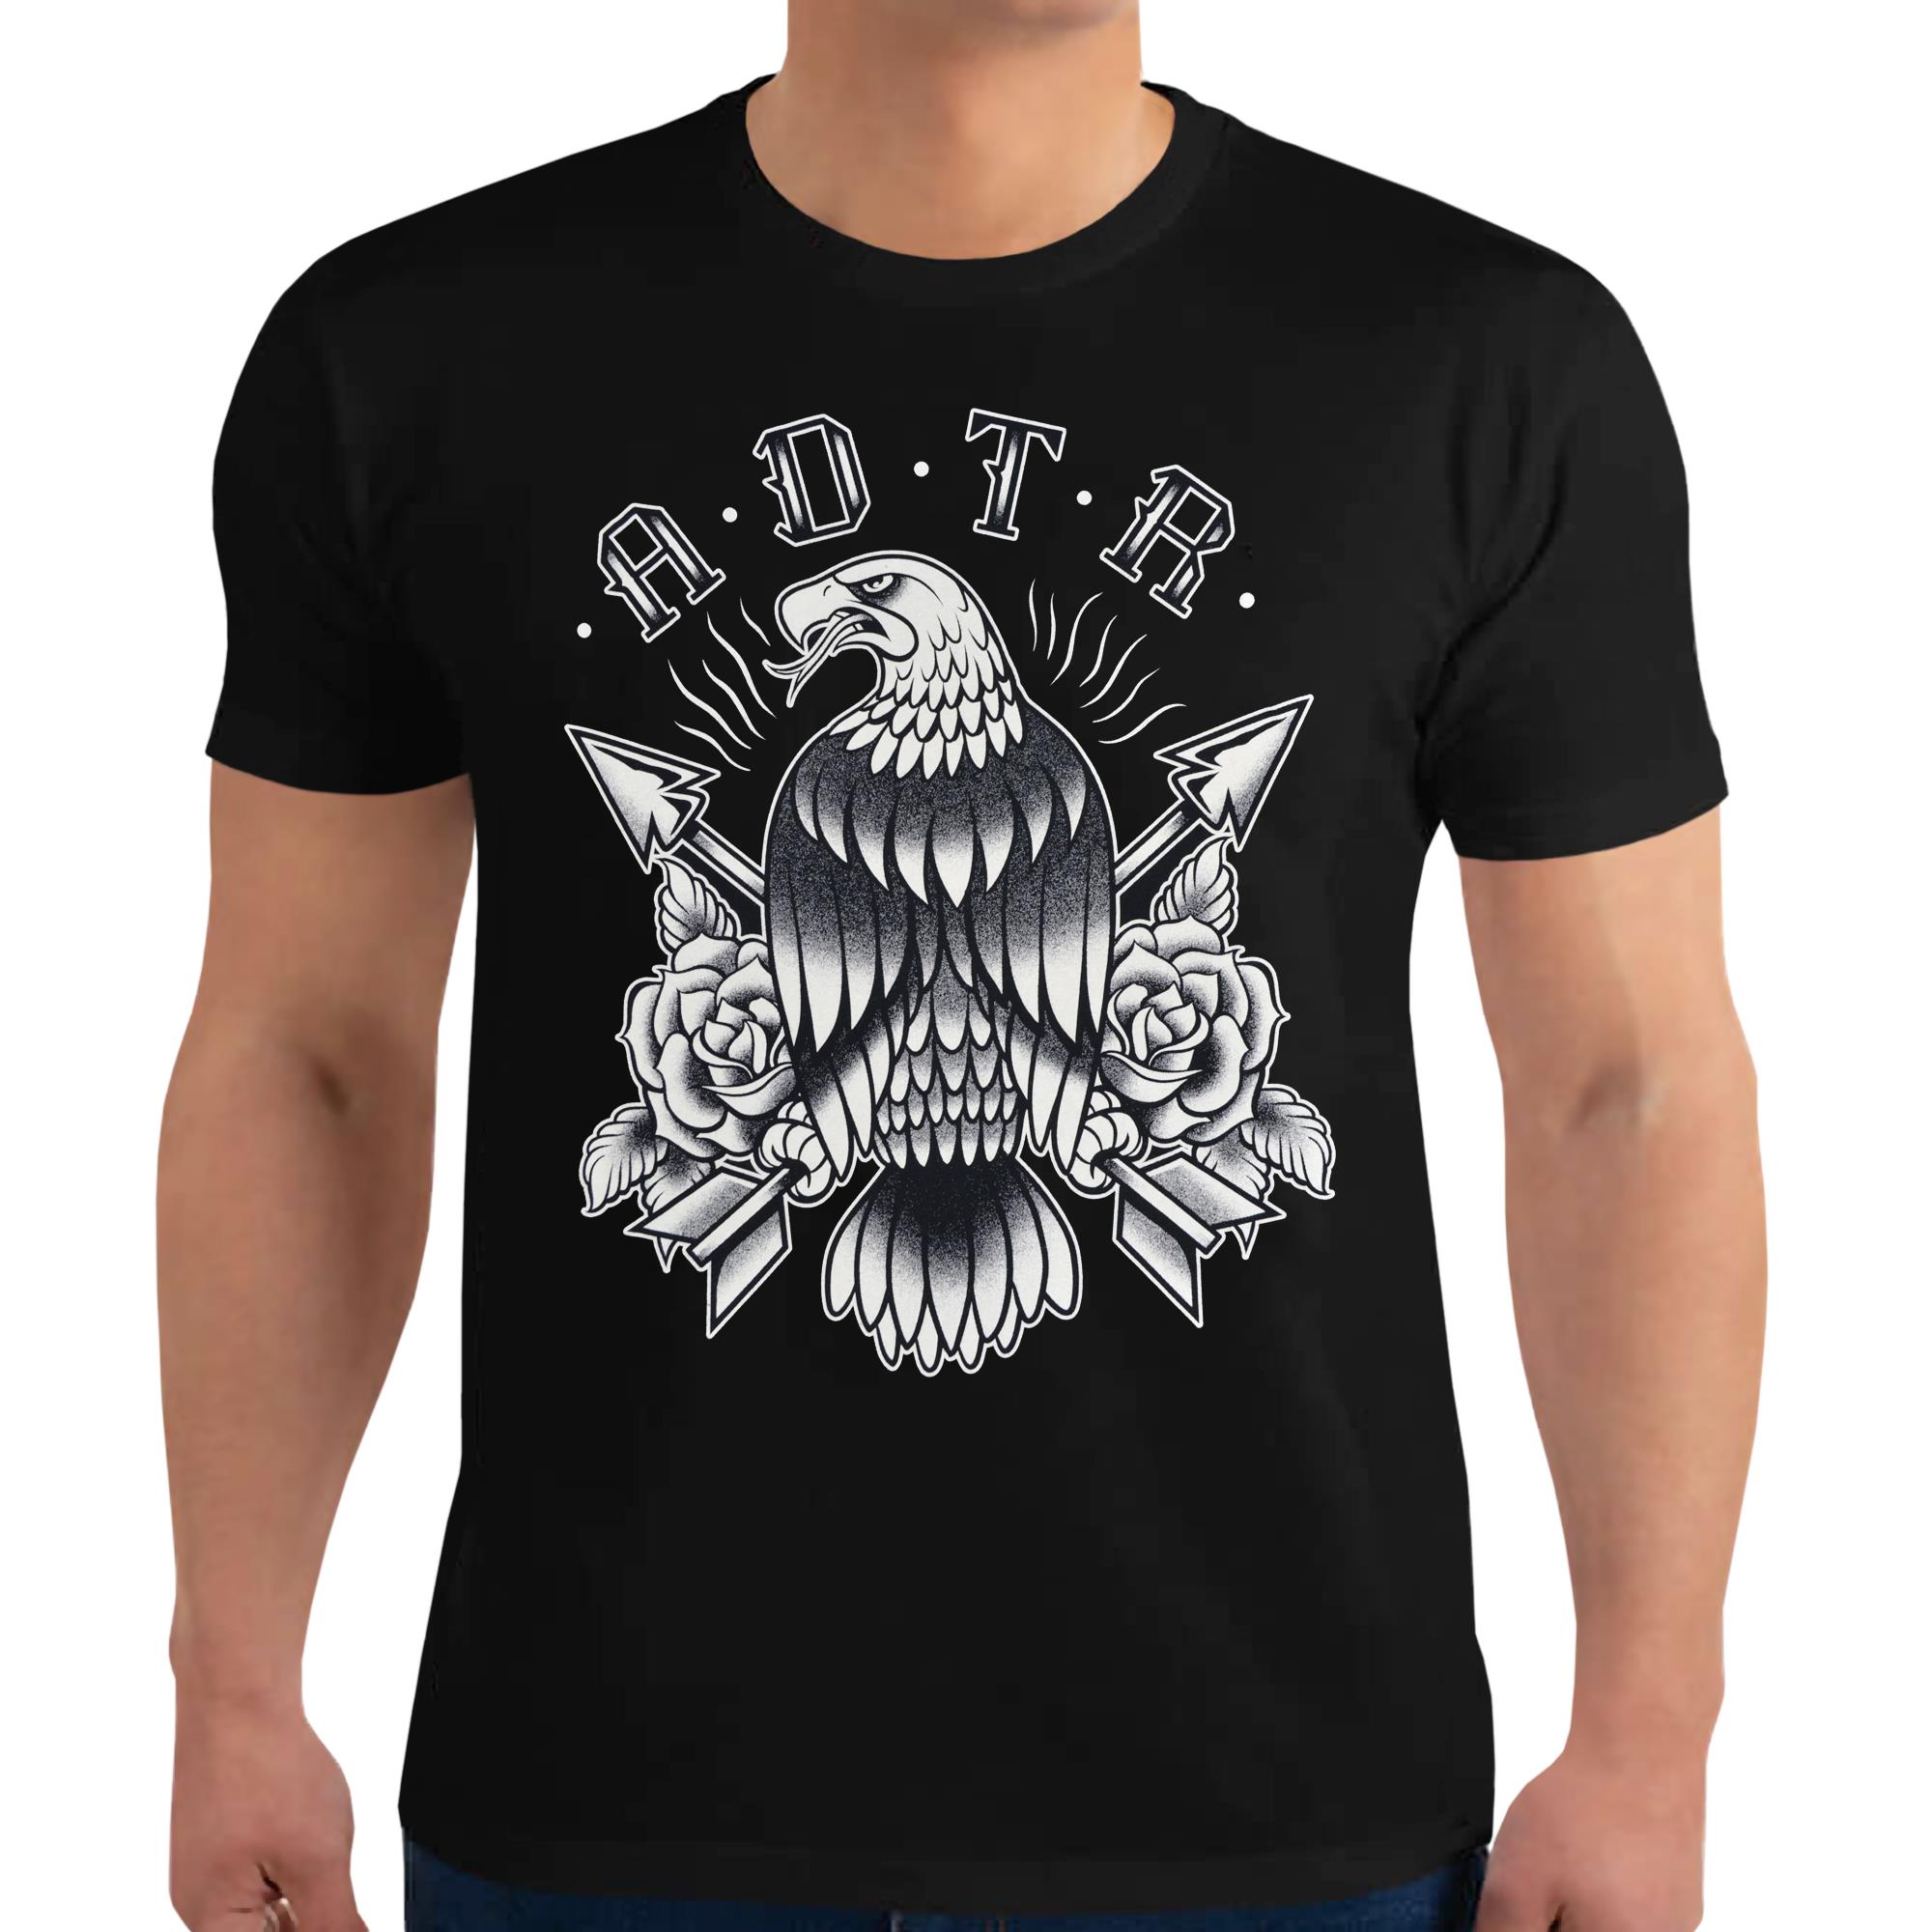 Eagle Tattoo T-Shirt